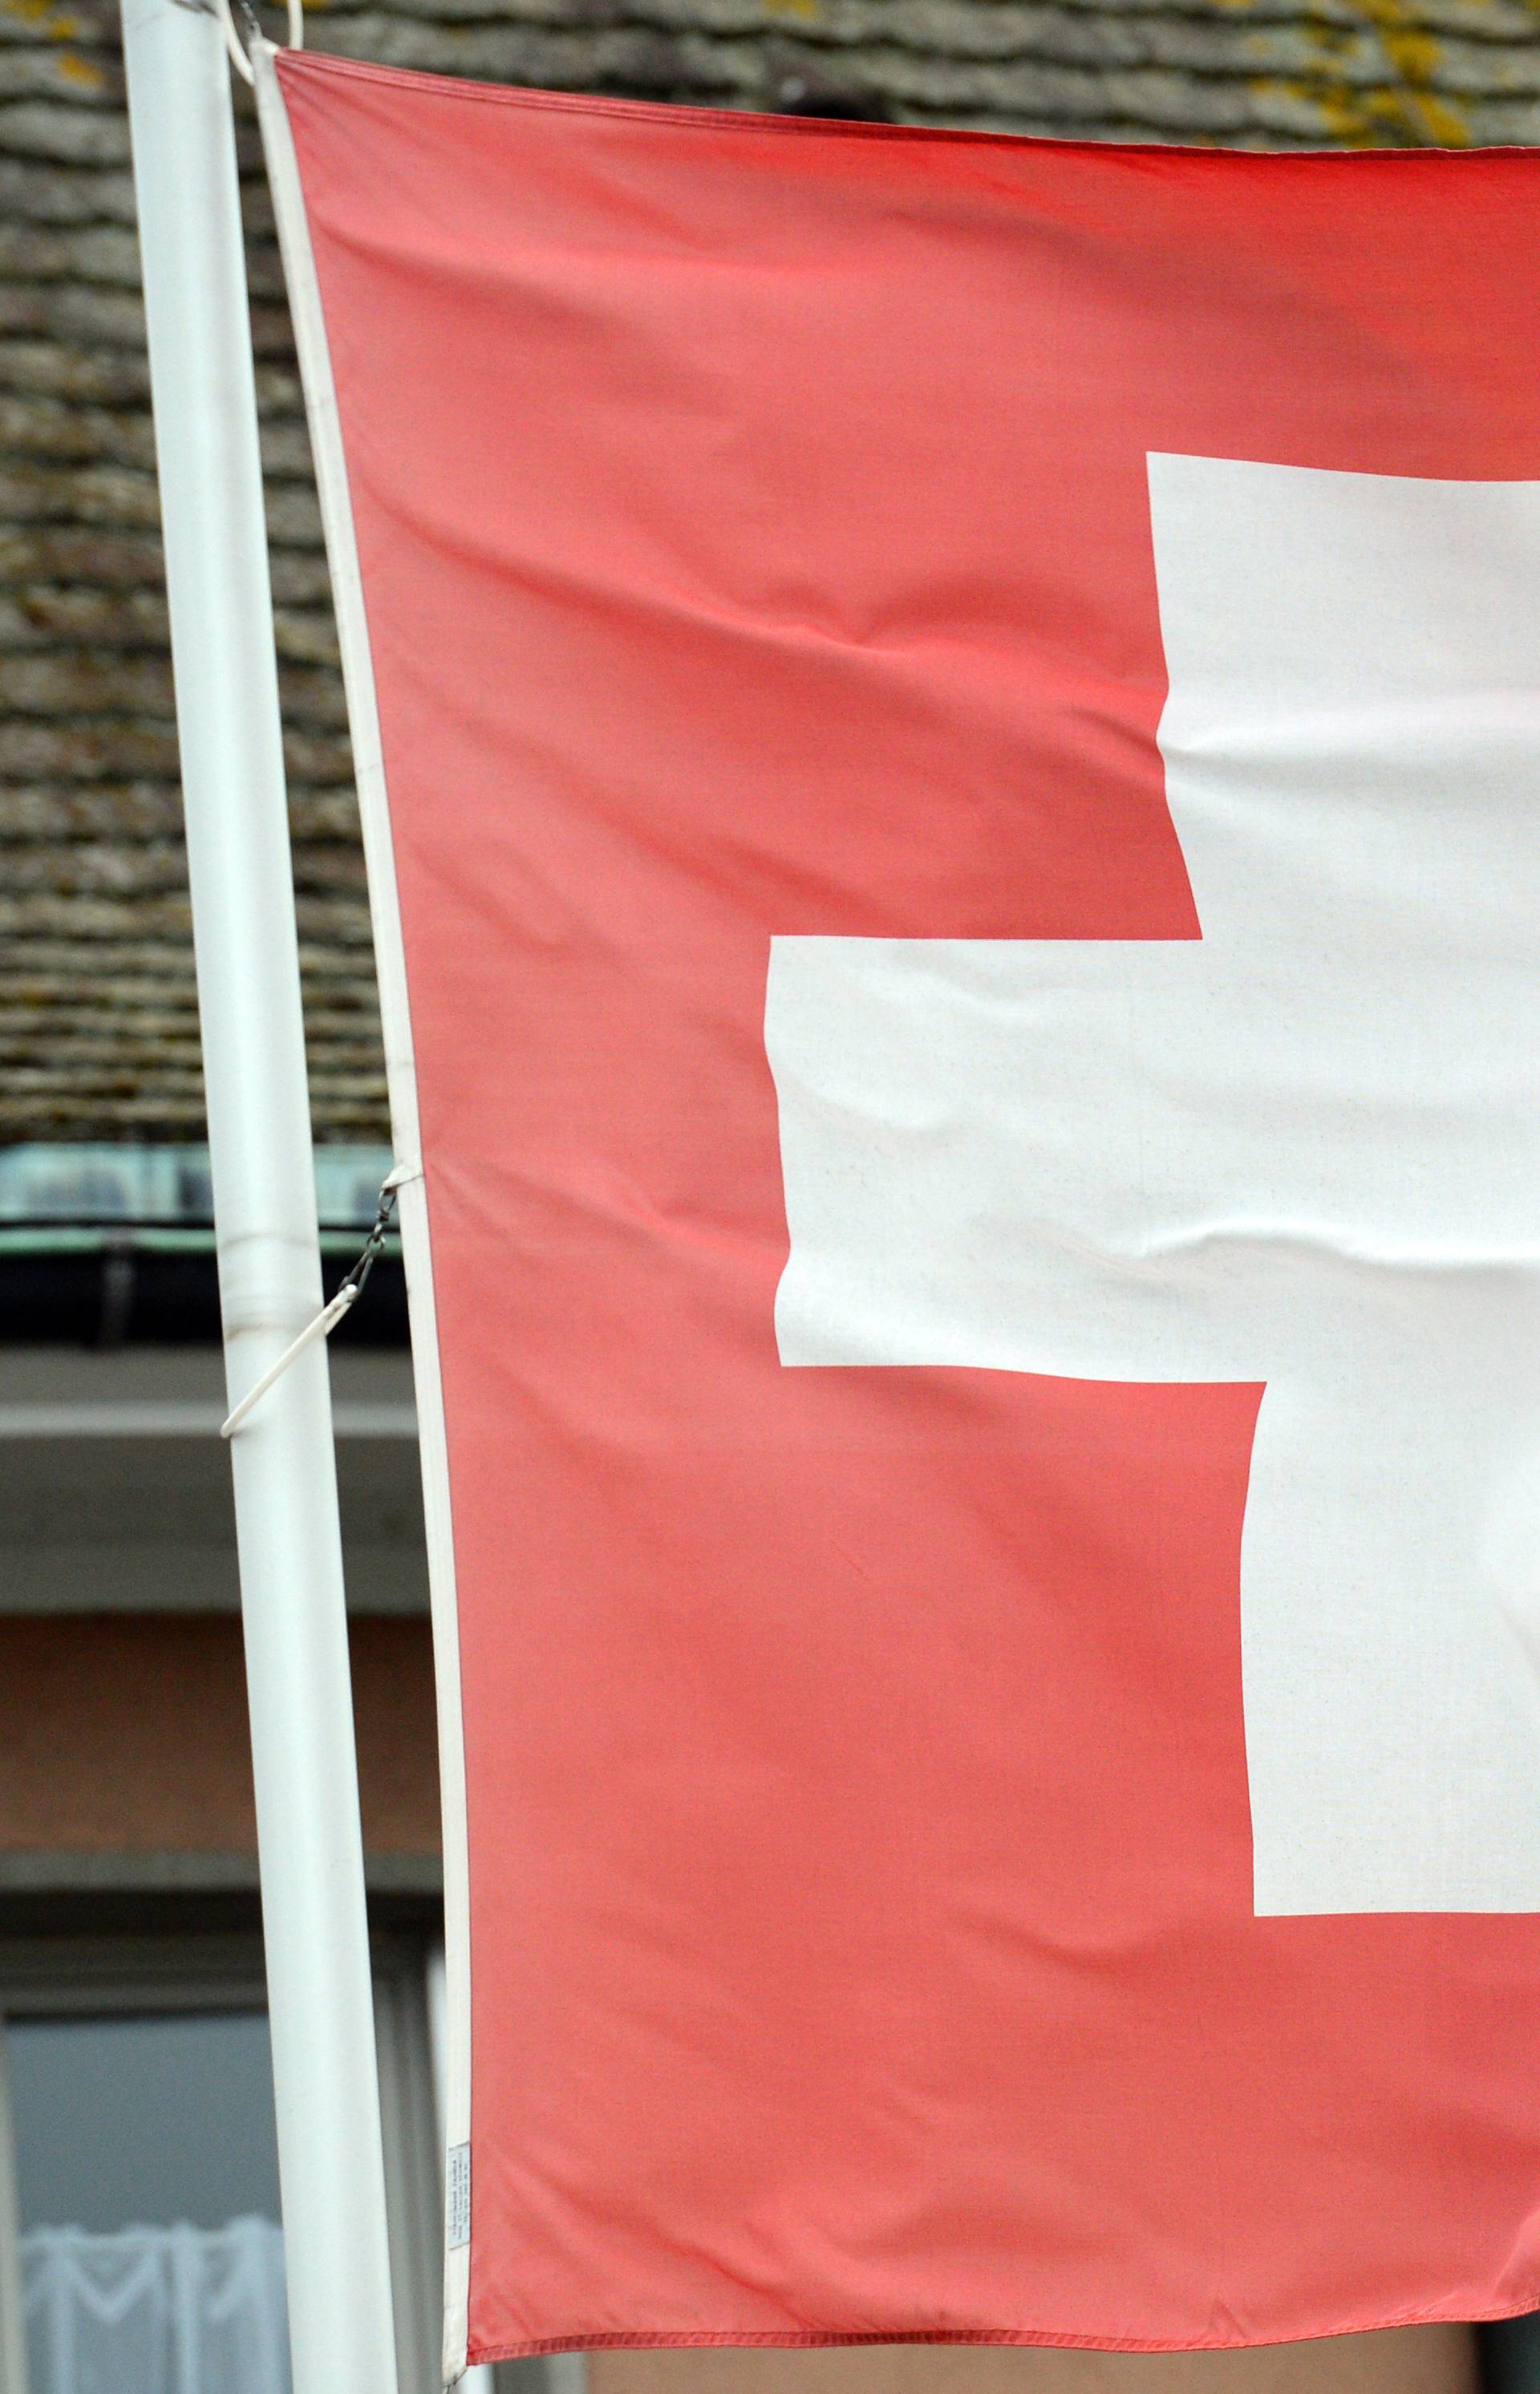 Switzerland limits immigration